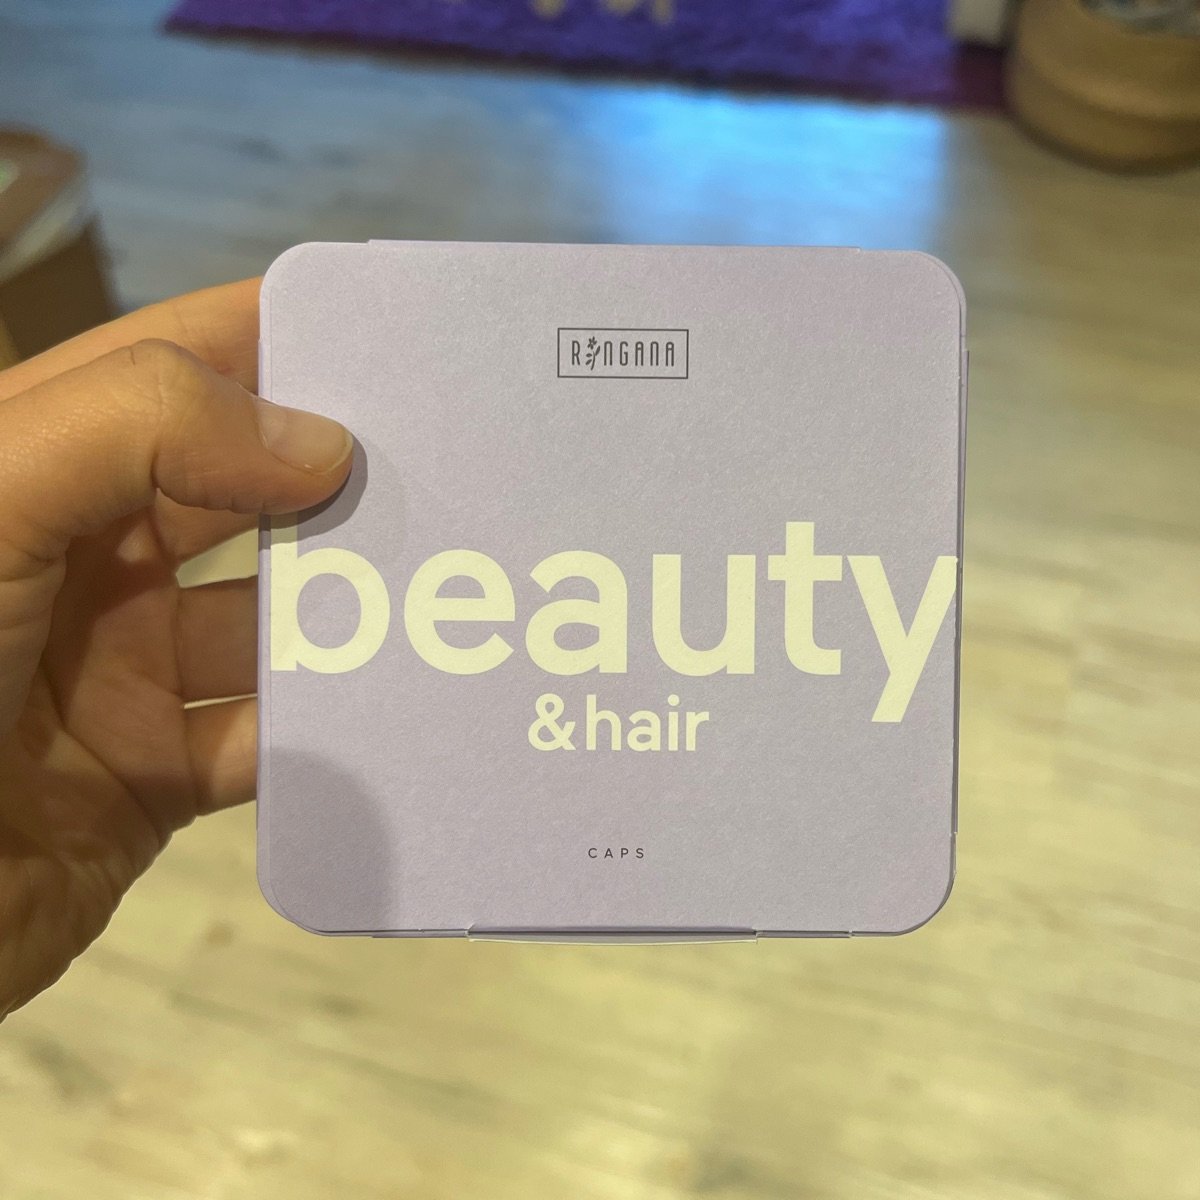 Ringana Caps beauty and hair Review | abillion